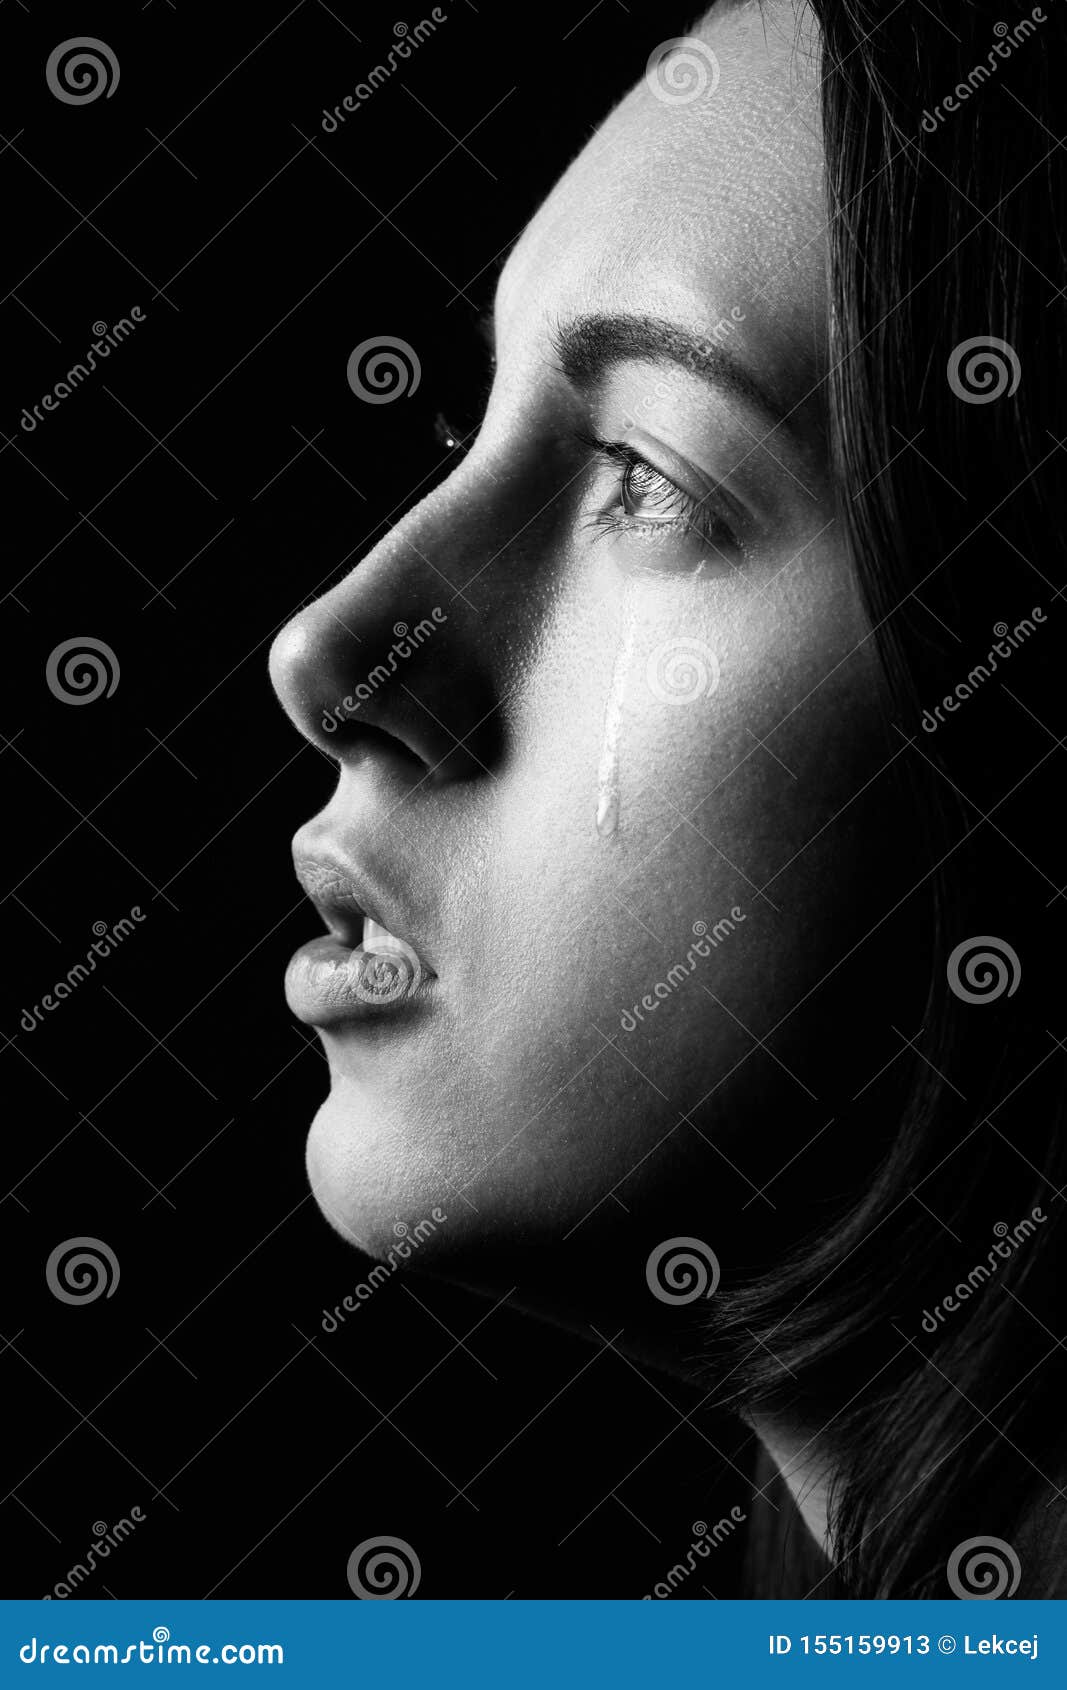 Sad crying girl stock image. Image of facial, expression - 155159913